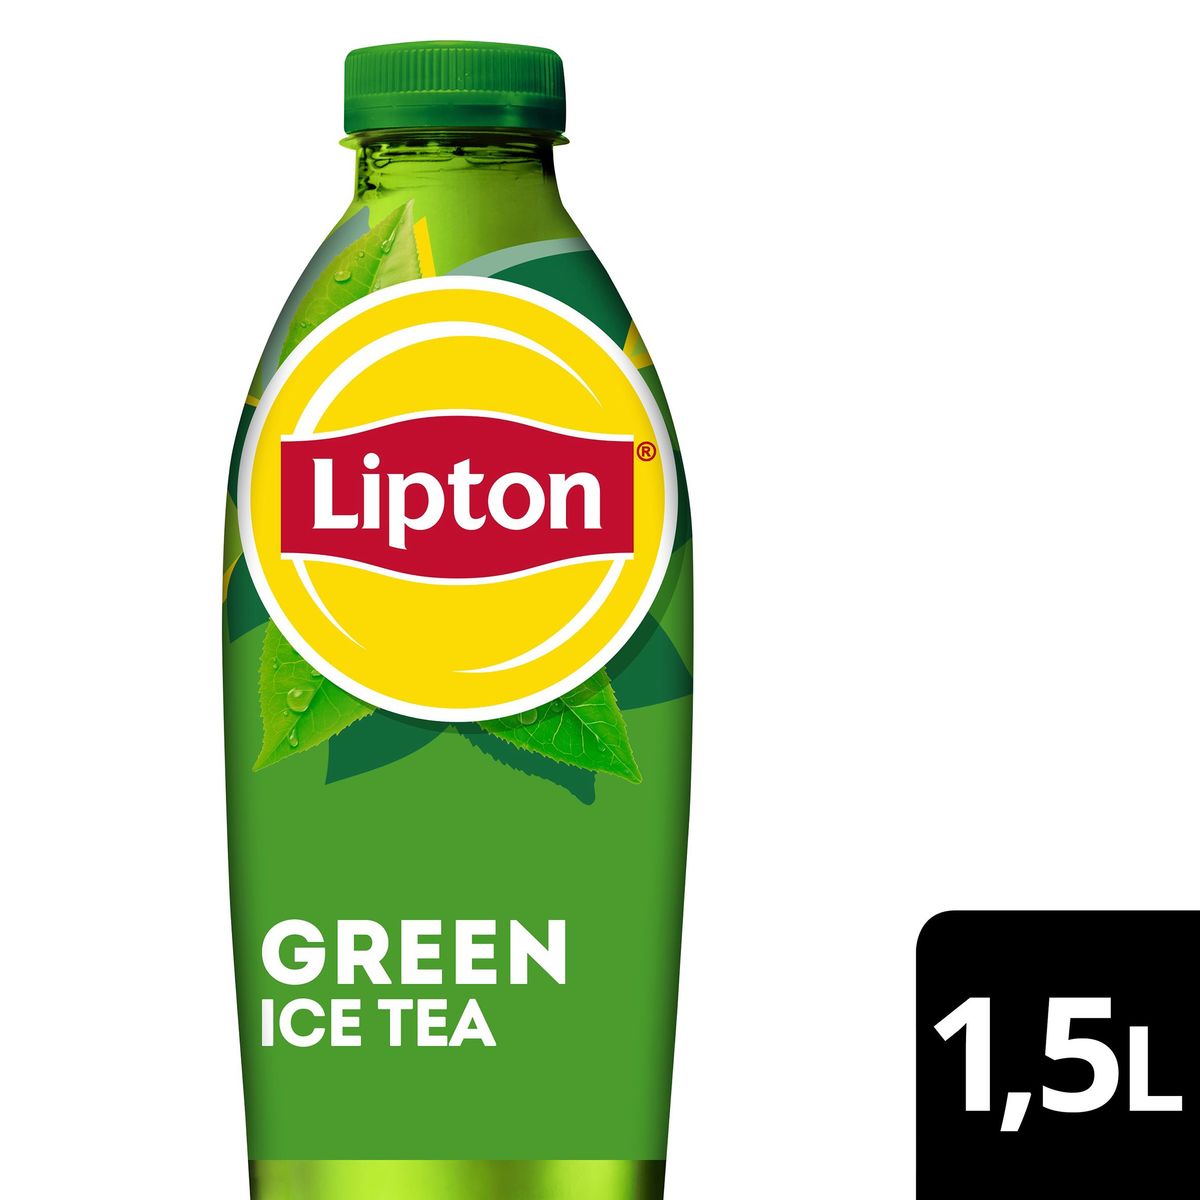 Lipton Ice Tea groene ijsthee Faible en sucre 1.5 L